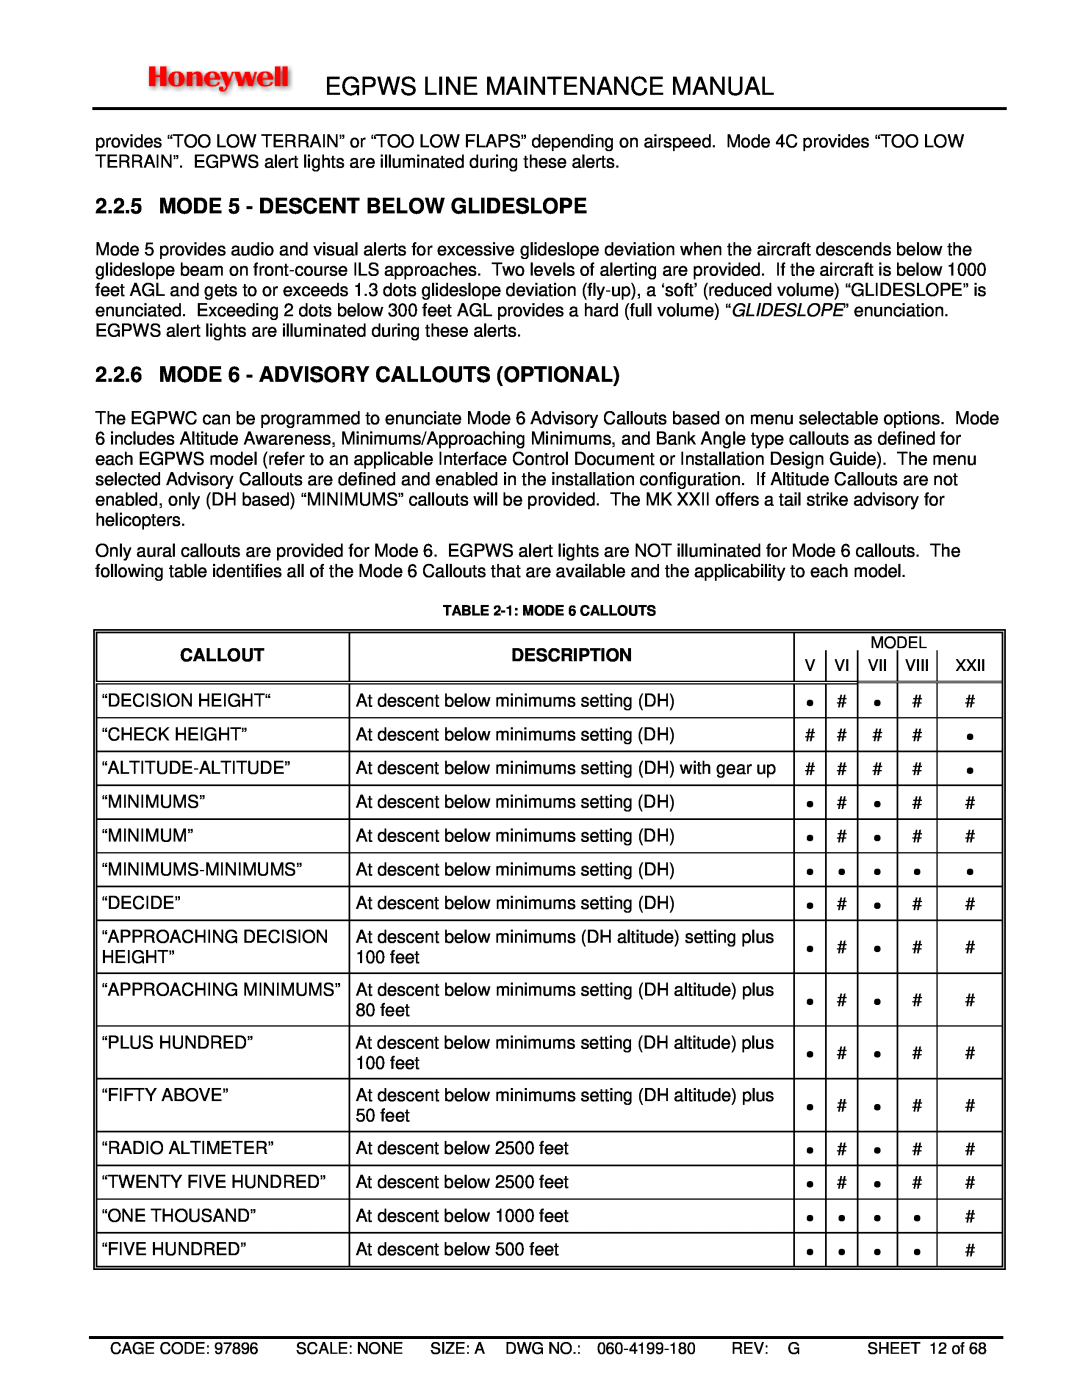 Honeywell MK XXII MODE 5 - DESCENT BELOW GLIDESLOPE, MODE 6 - ADVISORY CALLOUTS OPTIONAL, Egpws Line Maintenance Manual 